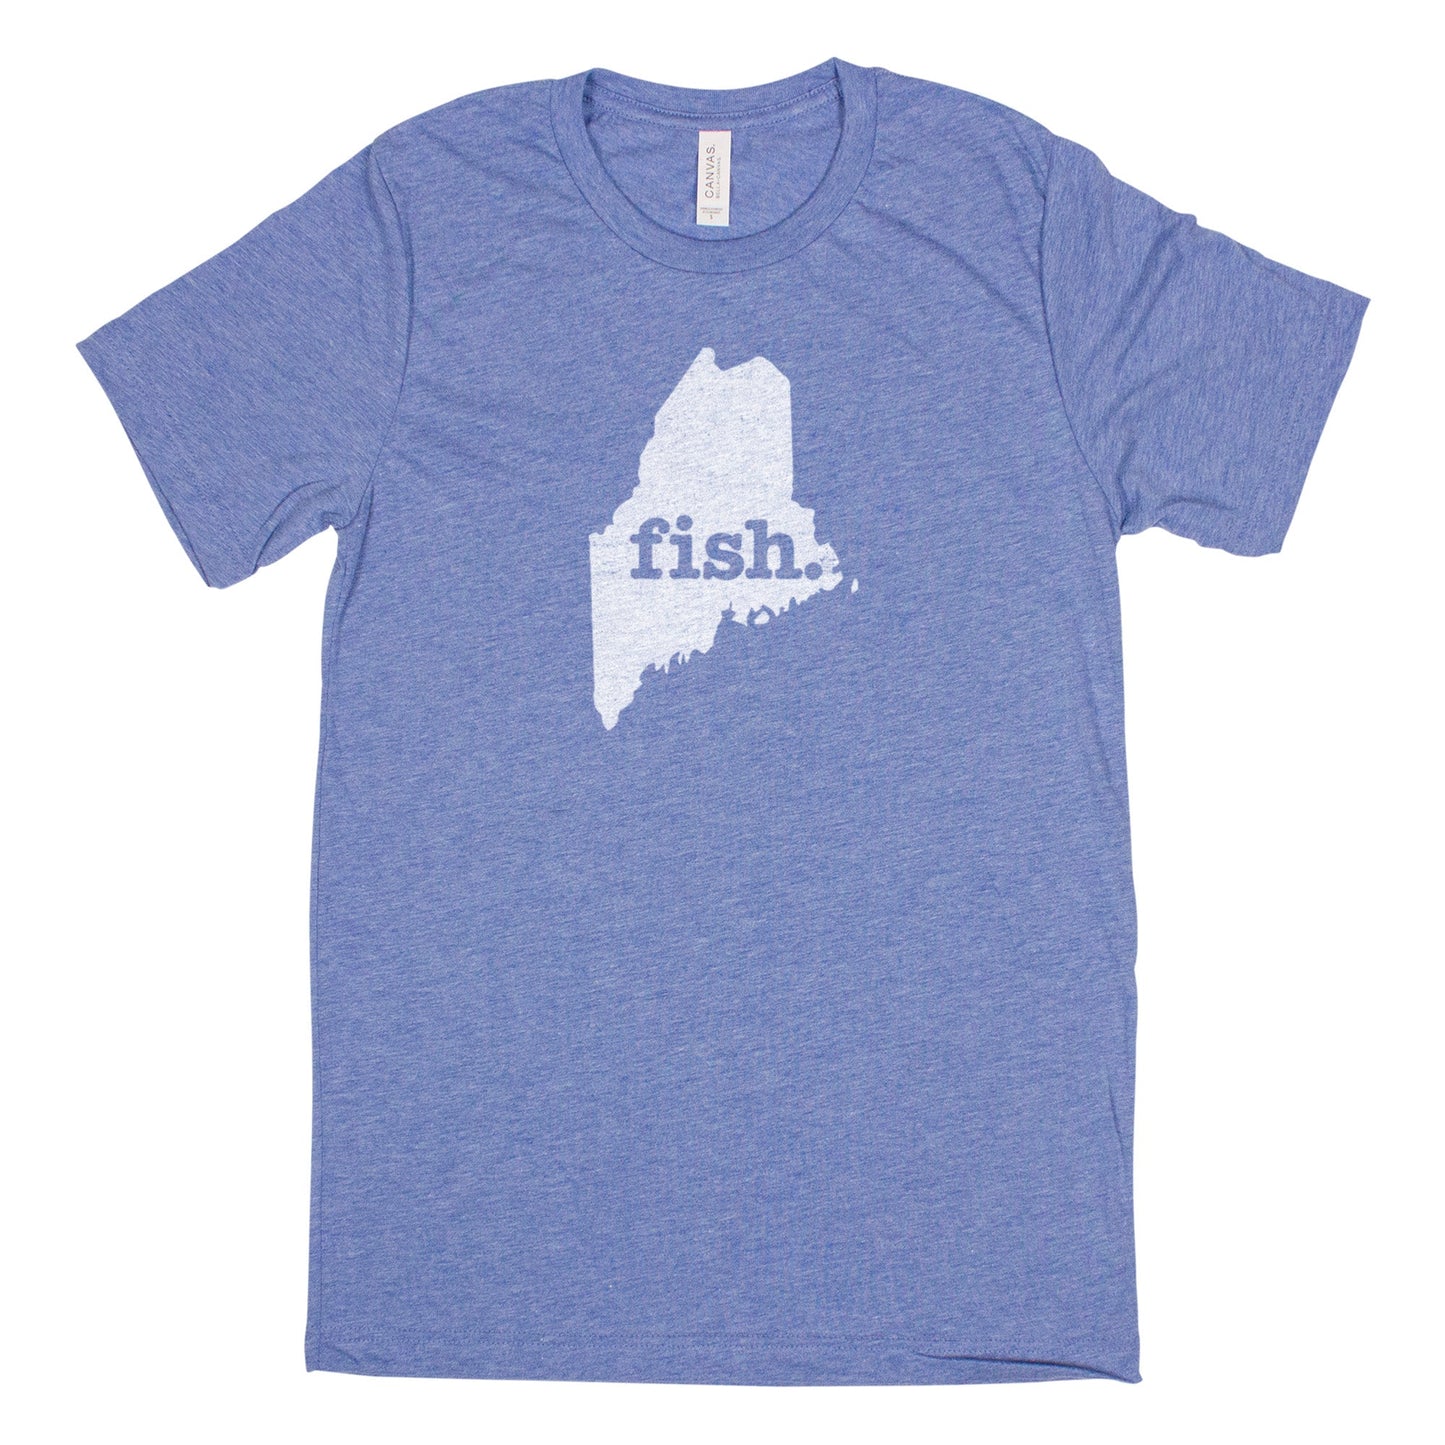 fish. Men's Unisex T-Shirt - Maine